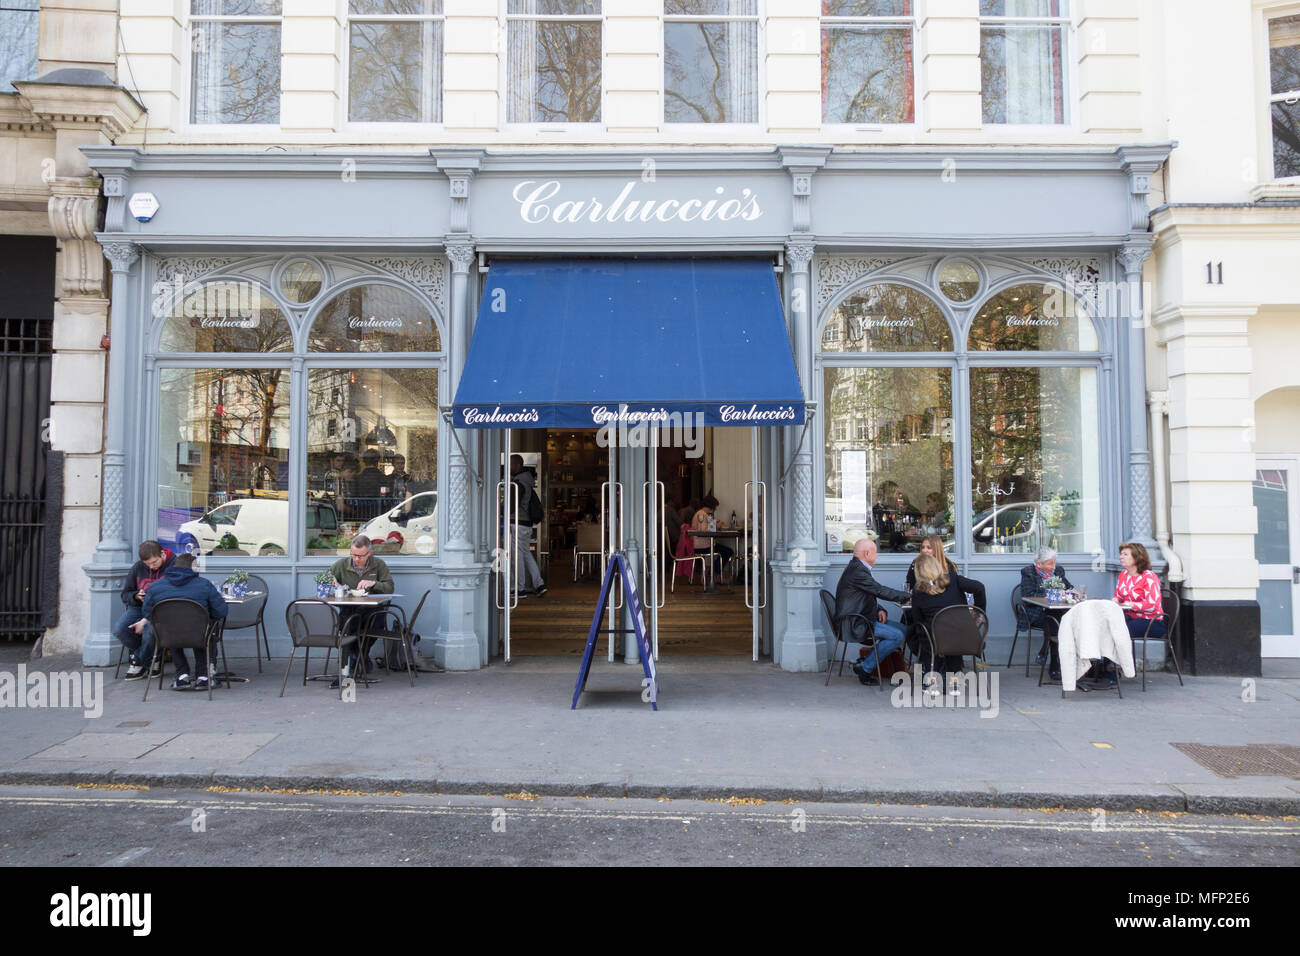 People eating outside Carluccio's Italian restaurant, West Smithfield, London, EC1, UK Stock Photo